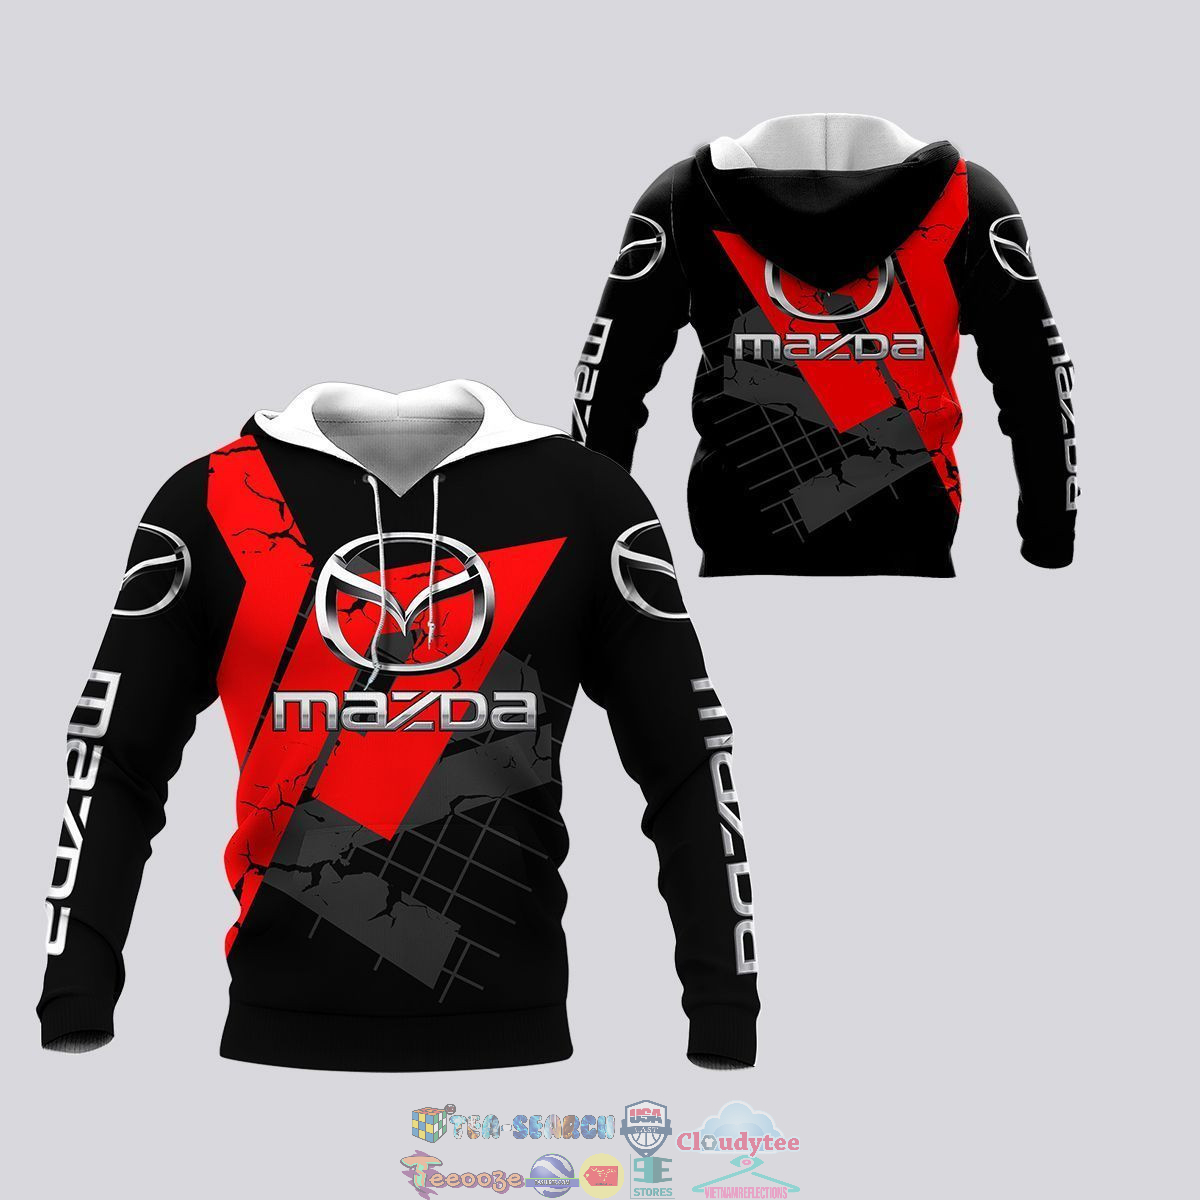 Mazda ver 15 3D hoodie and t-shirt – Saleoff